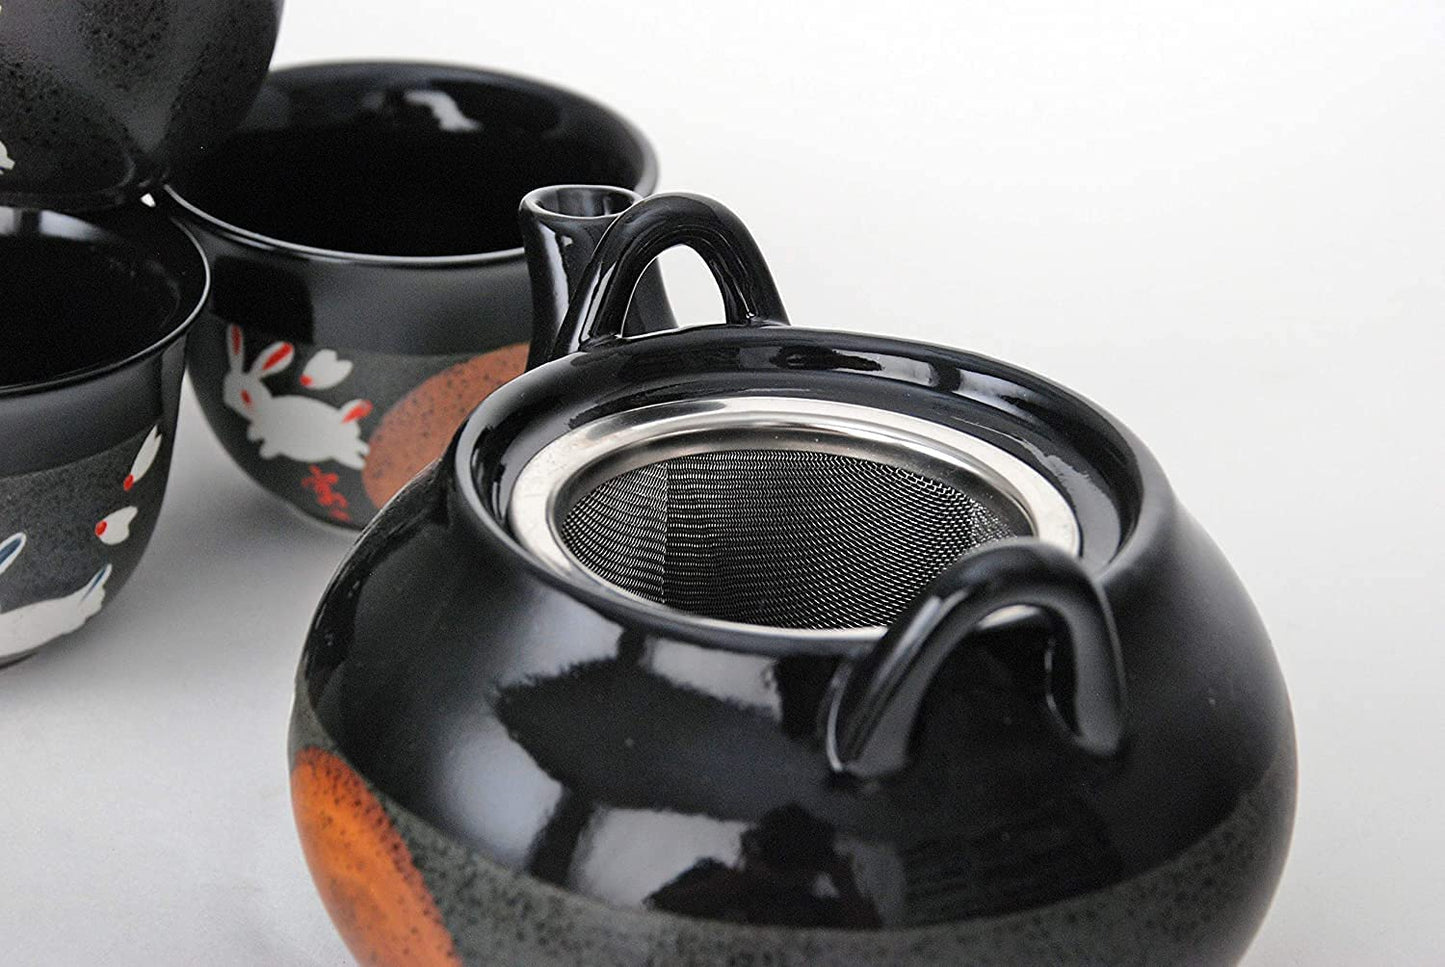 Happy Sales HSTS-RBTMN5, Perfect 5 Piece Ceramic Japanese Design Tea set Rabbit & Moon